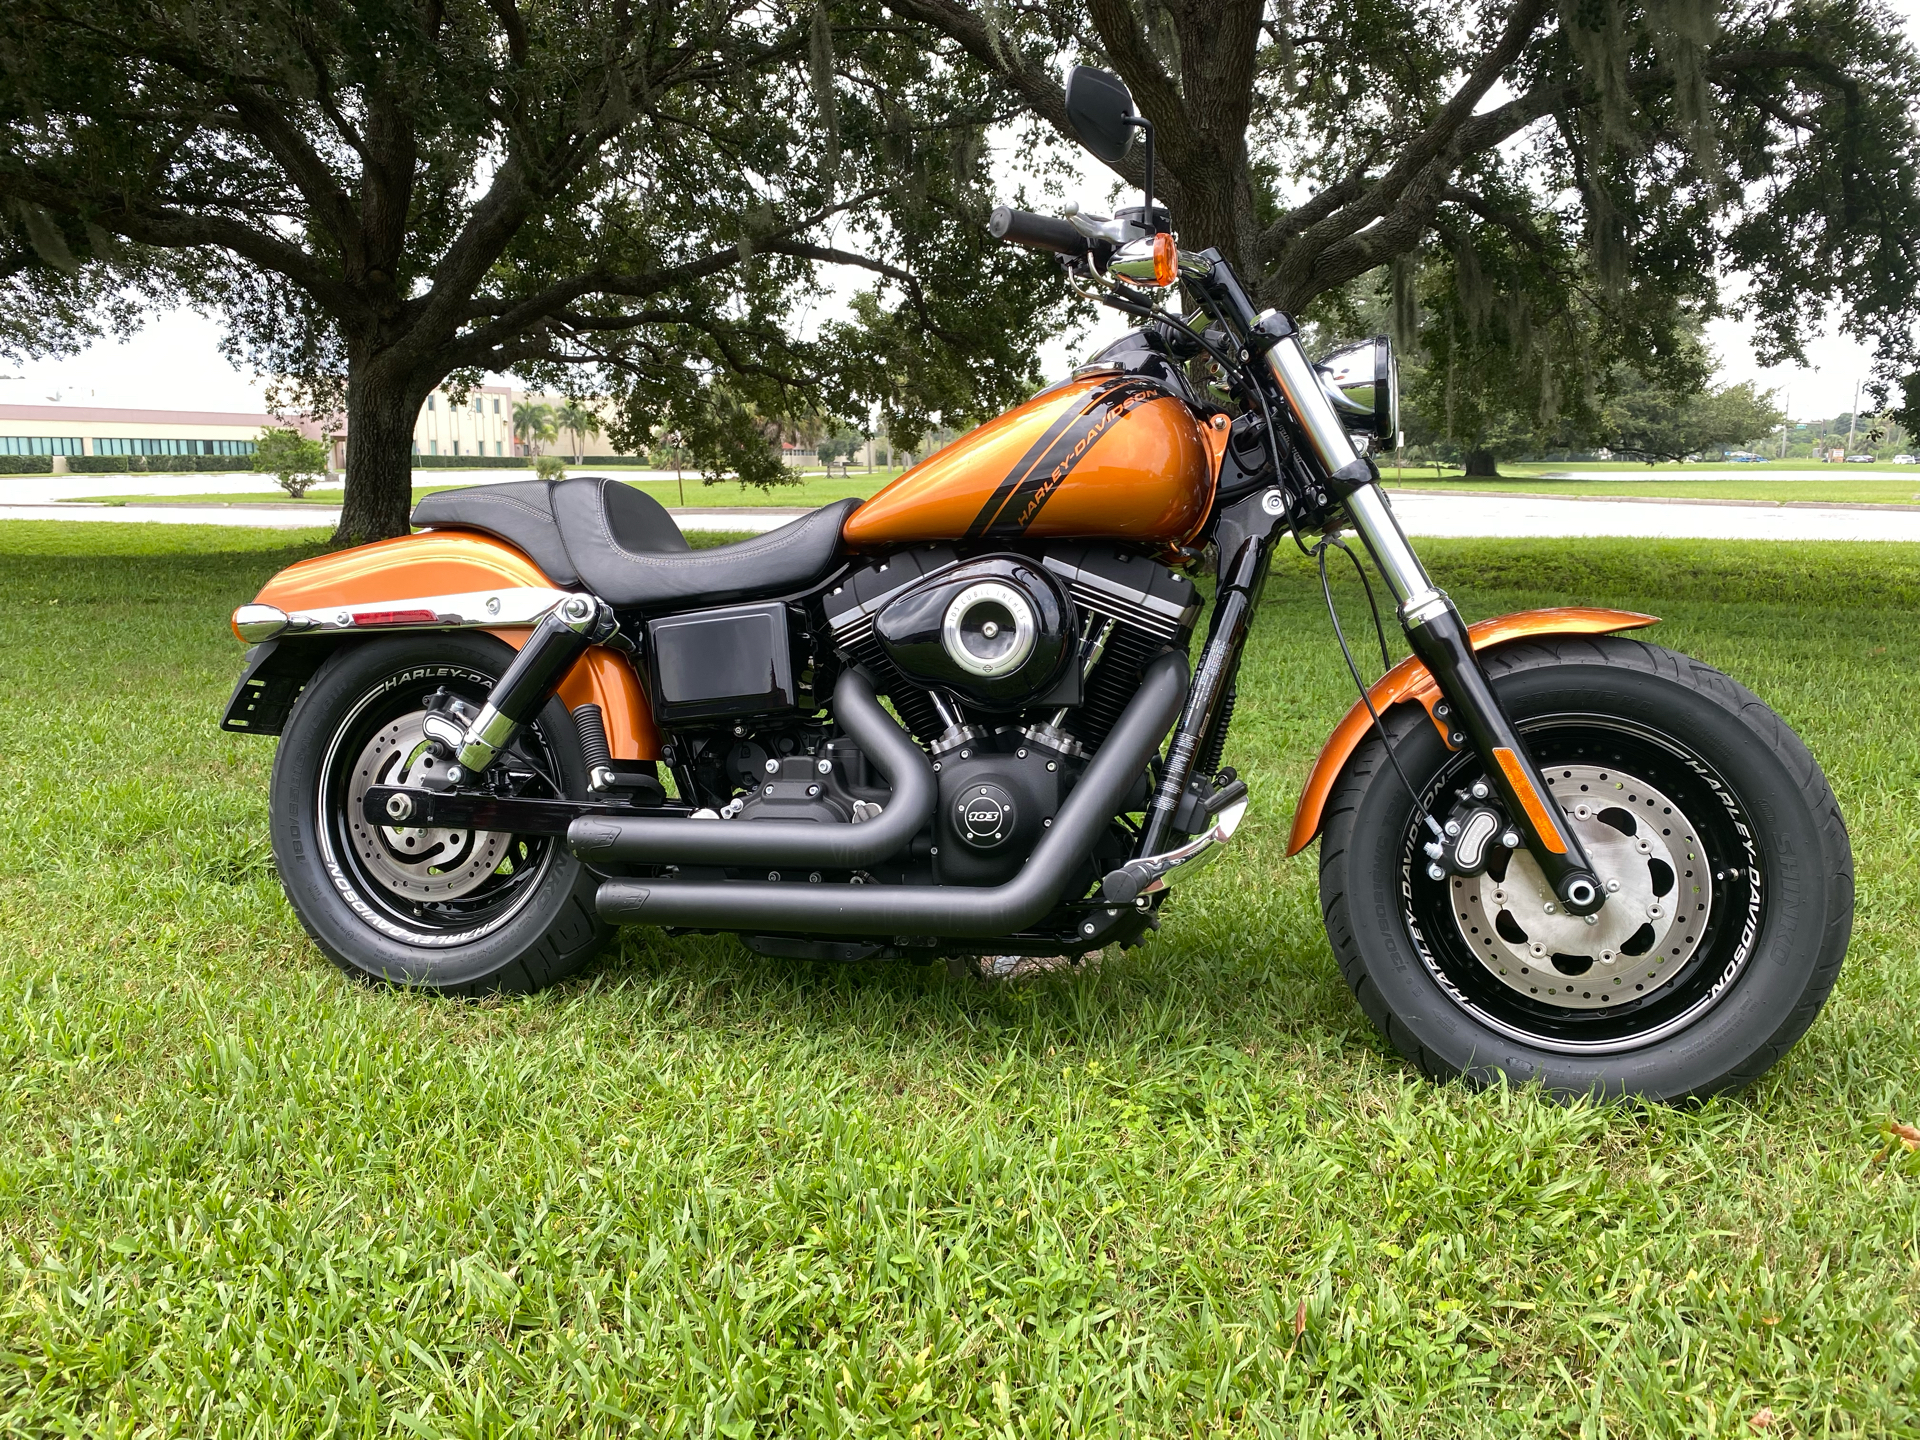 Used 2014 Harley Davidson Dyna Fat Bob Motorcycles In Sarasota Fl Amber Whiskey 322609